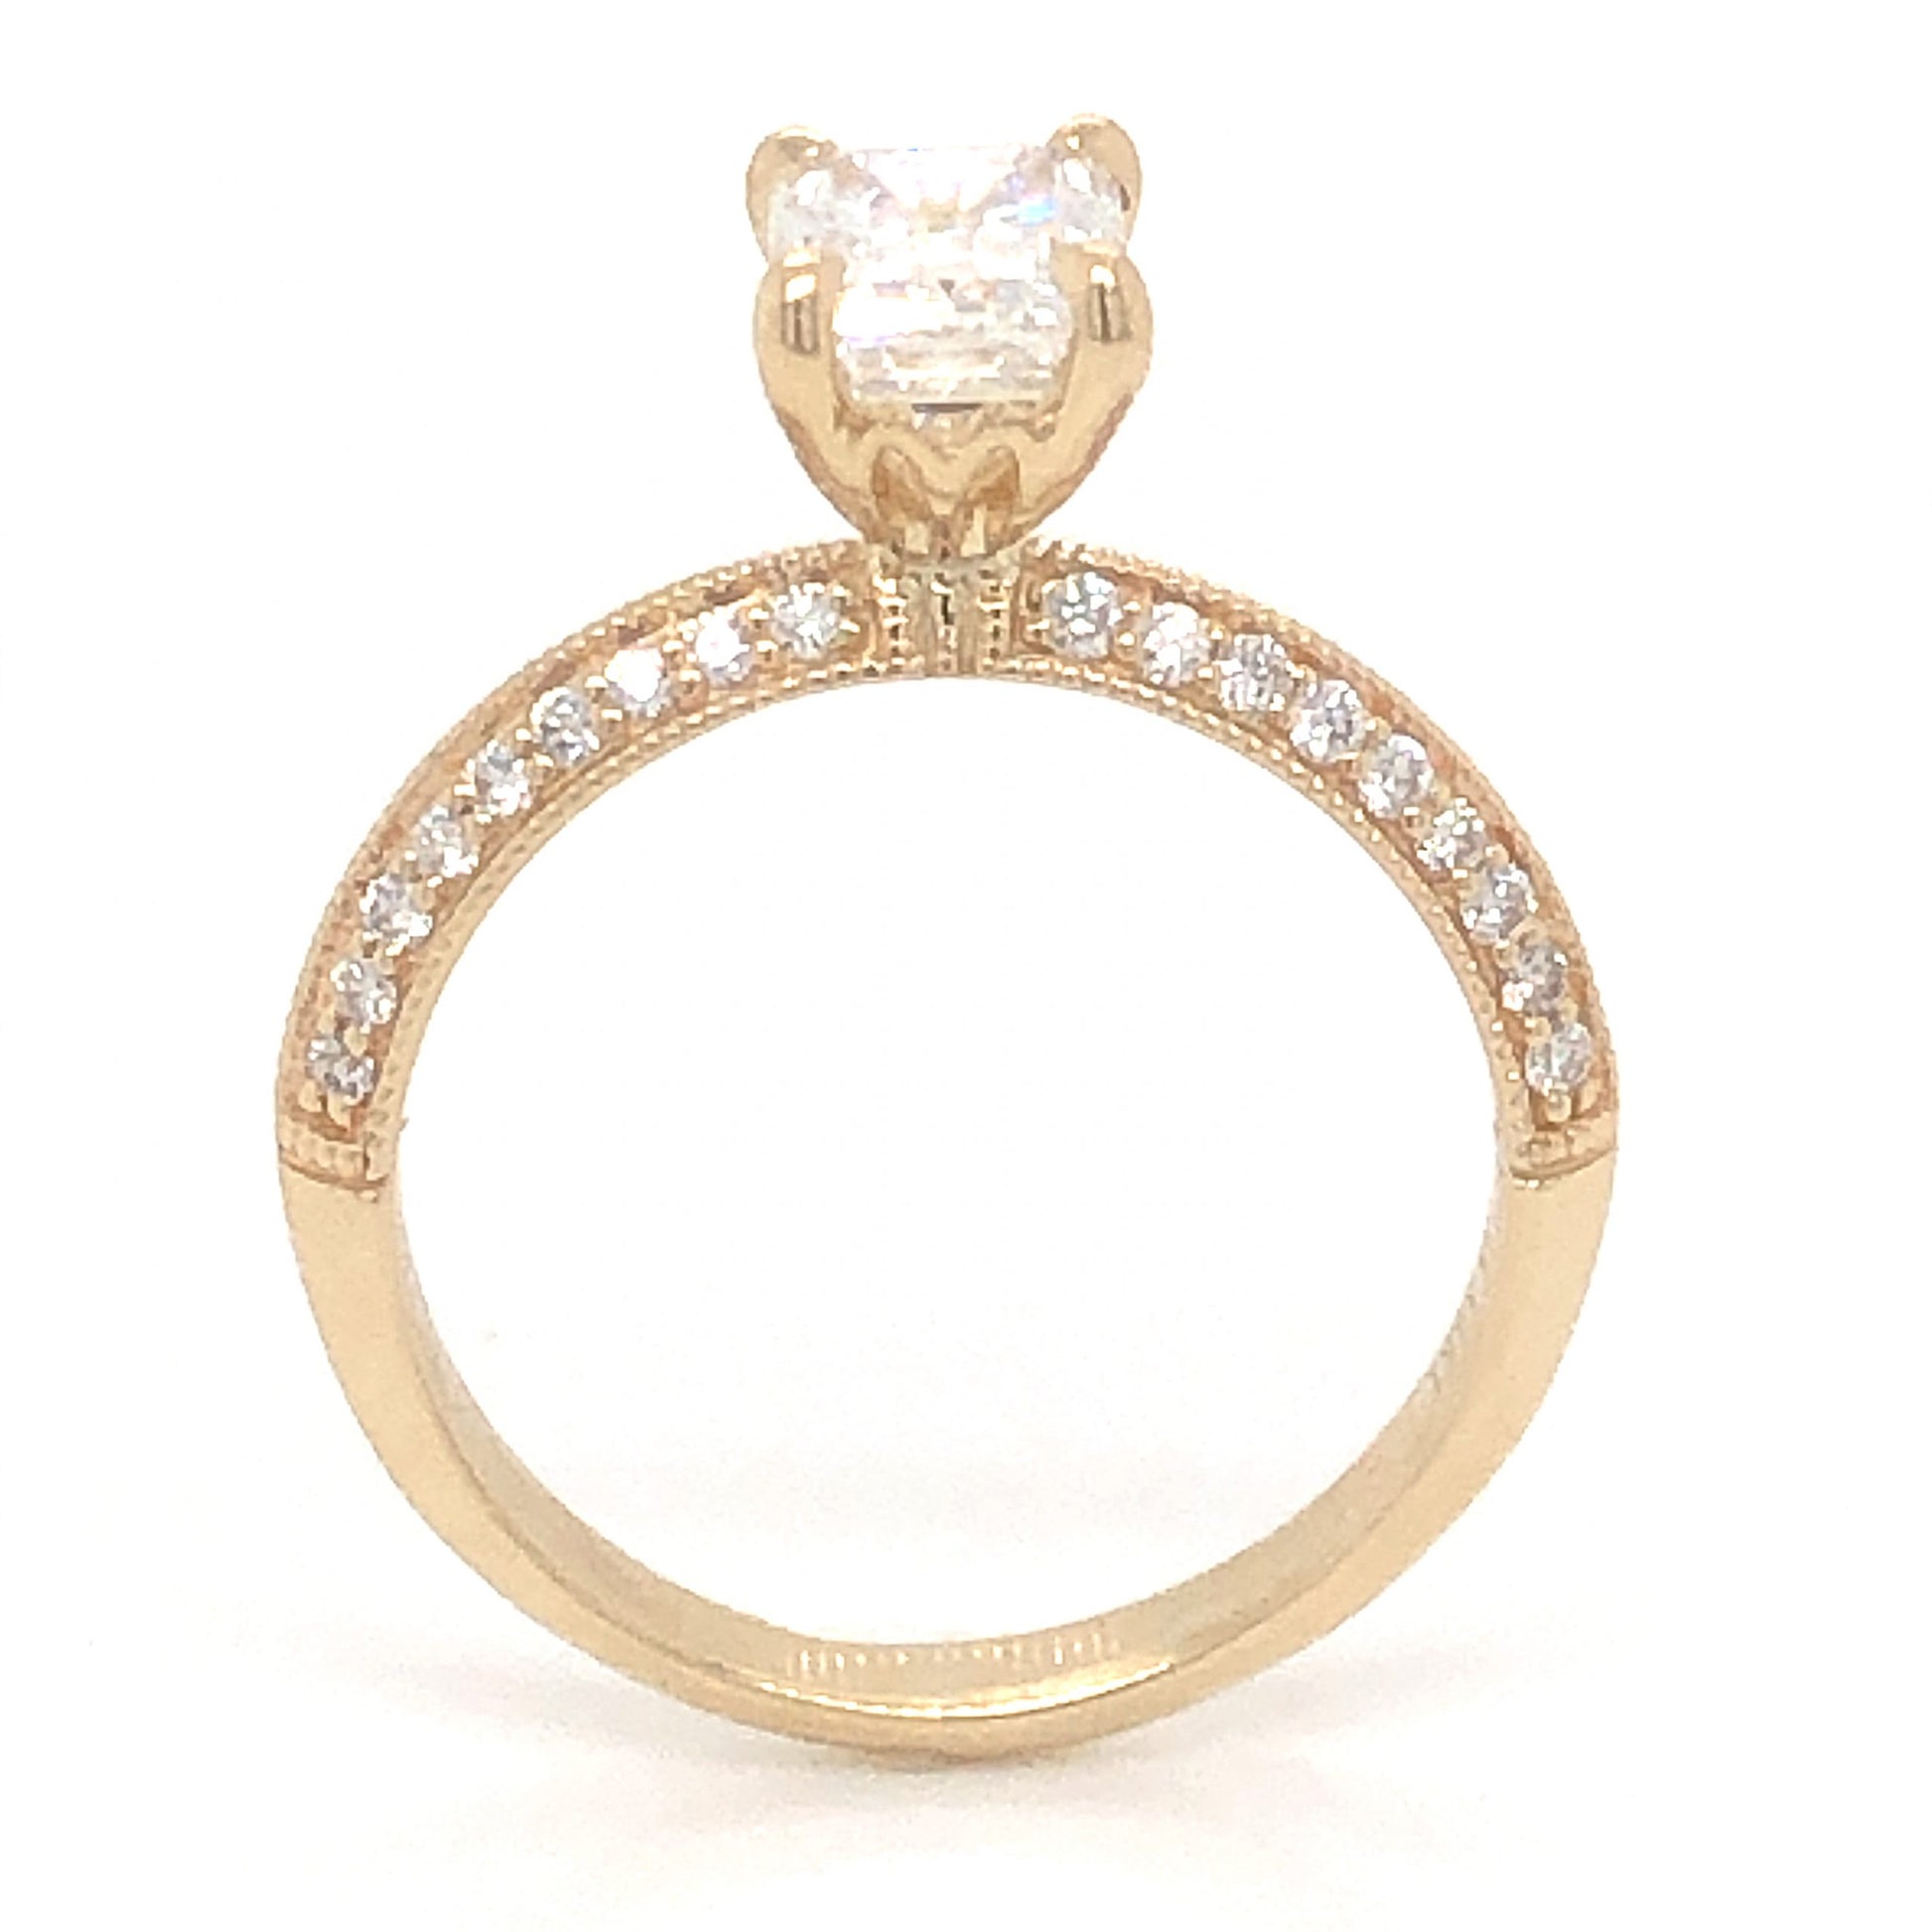 1.20 Emerald Cut Diamond Engagement Ring in 14k Yellow GoldComposition: 14 Karat Yellow GoldRing Size: 6Total Diamond Weight: 1.56 ctTotal Gram Weight: 2.6 gInscription: JA 14k